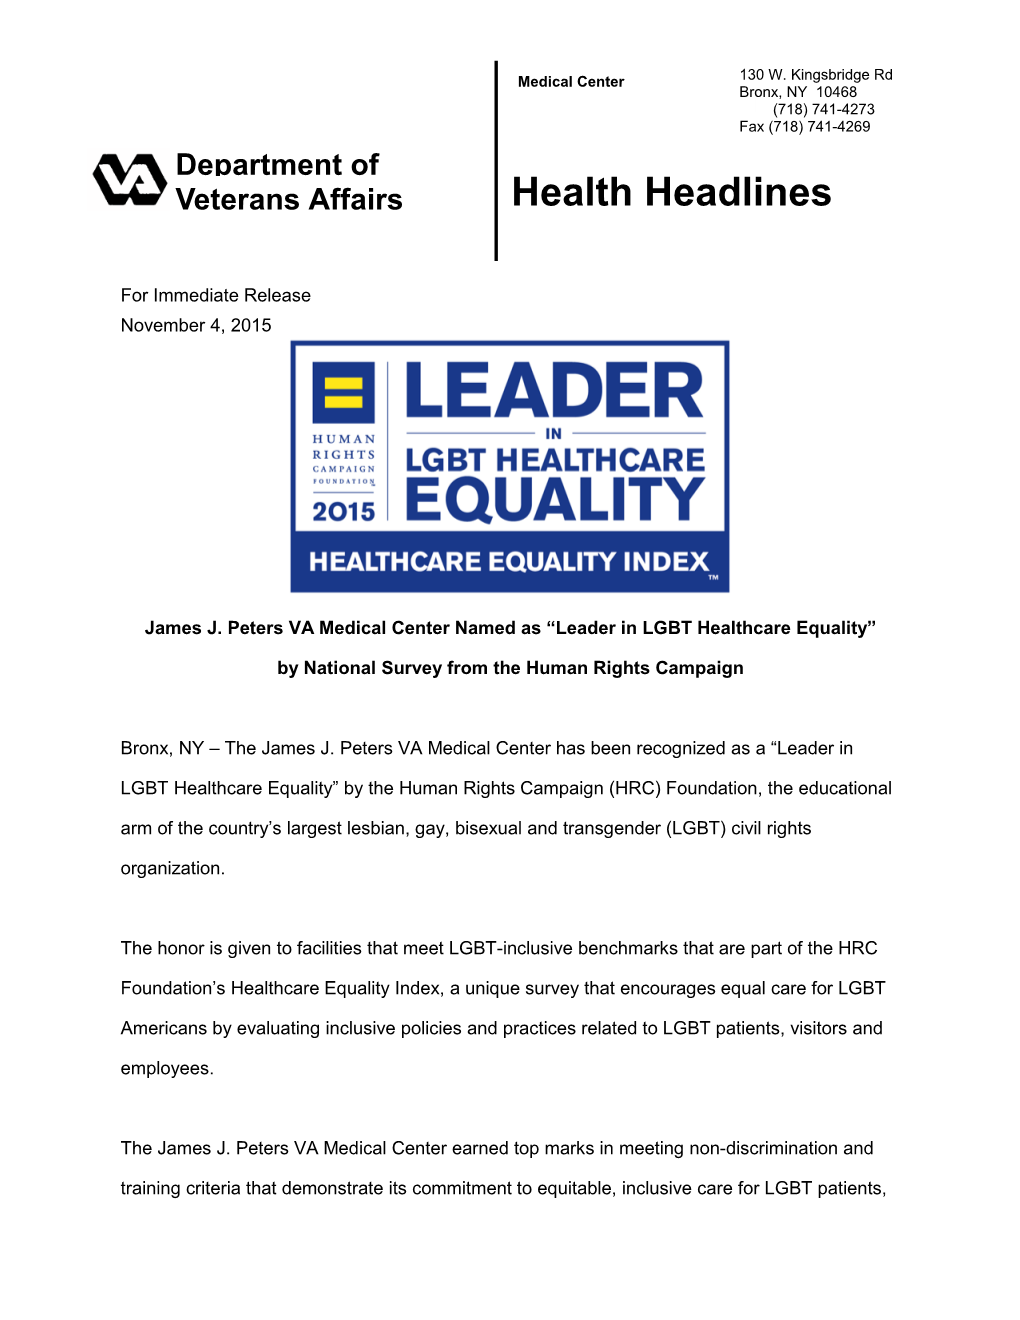 JJPVAMC Named Leader in LGBT Healthcare Equality